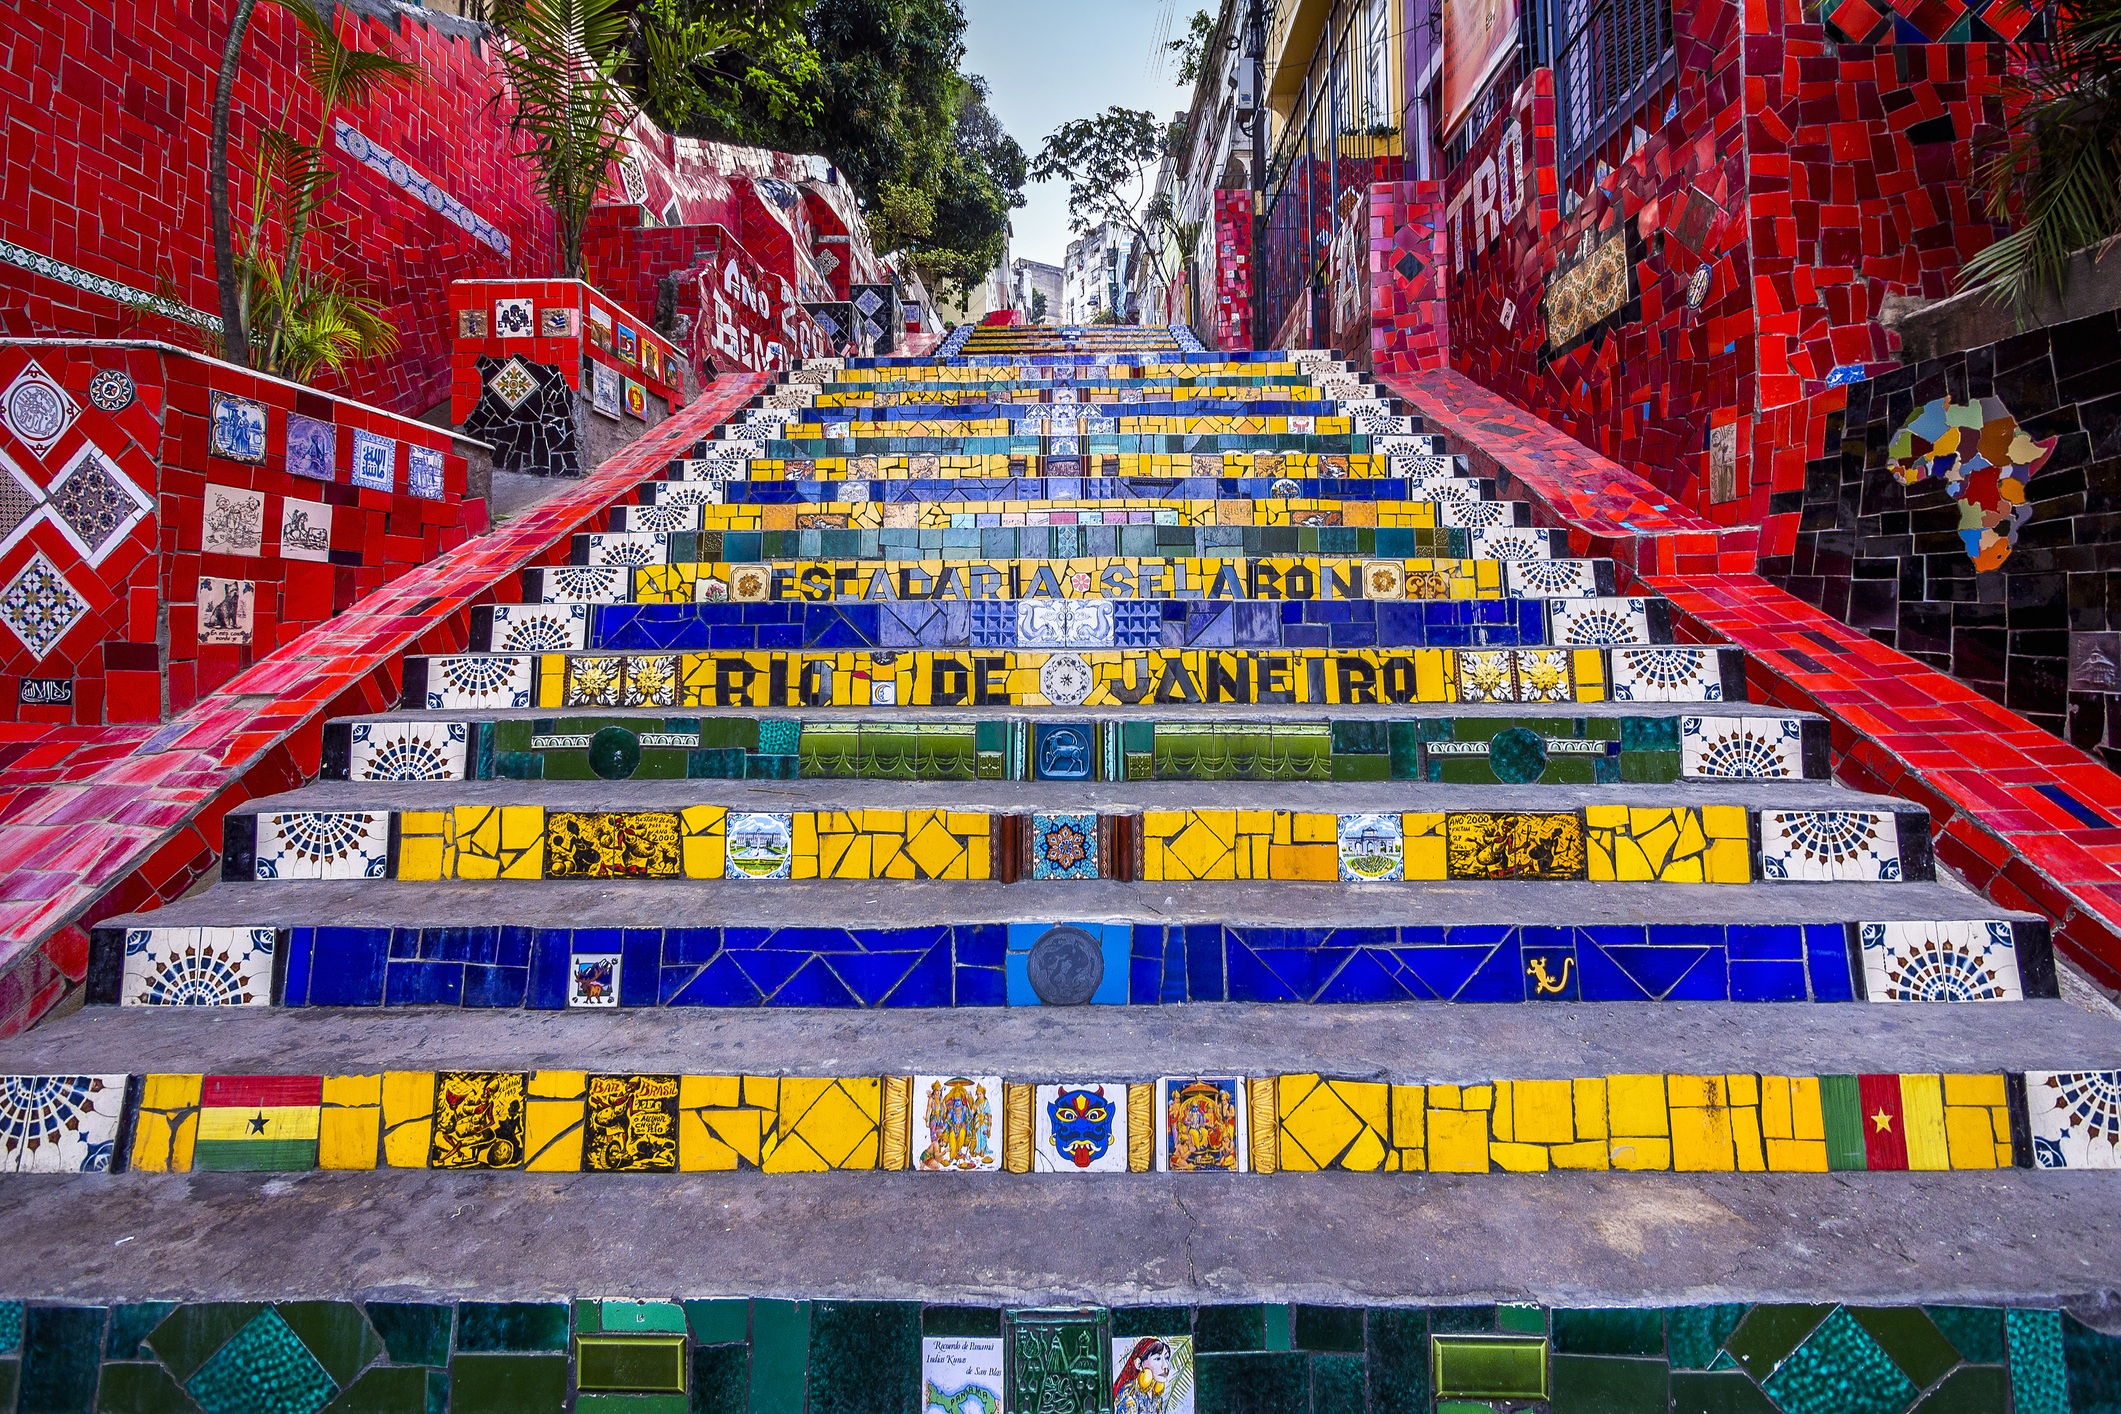 Rio de Janeiro, Brazil - October 2, 2012: View of Lapa Steps, also known as Selaron's Staircase, in Rio de Janeiro, Brazil. The colourful tiled staircase is the most famous work of Chilean-born artist Jorge Selaron.